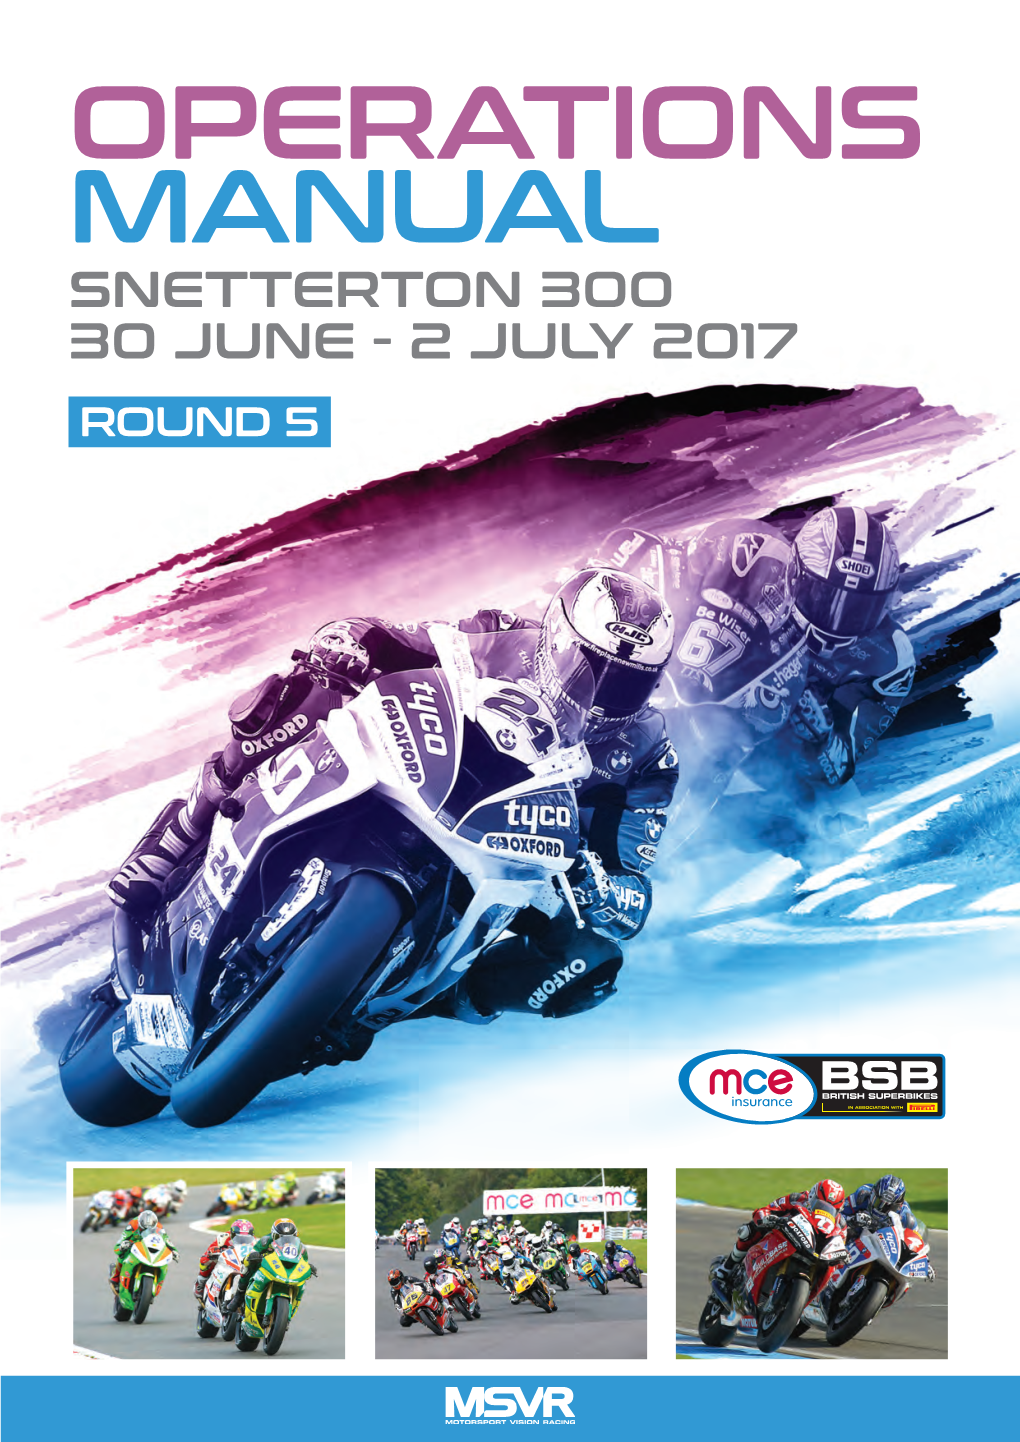 Operations Manual Snetterton 300 30 June - 2 July 2017 Round 5